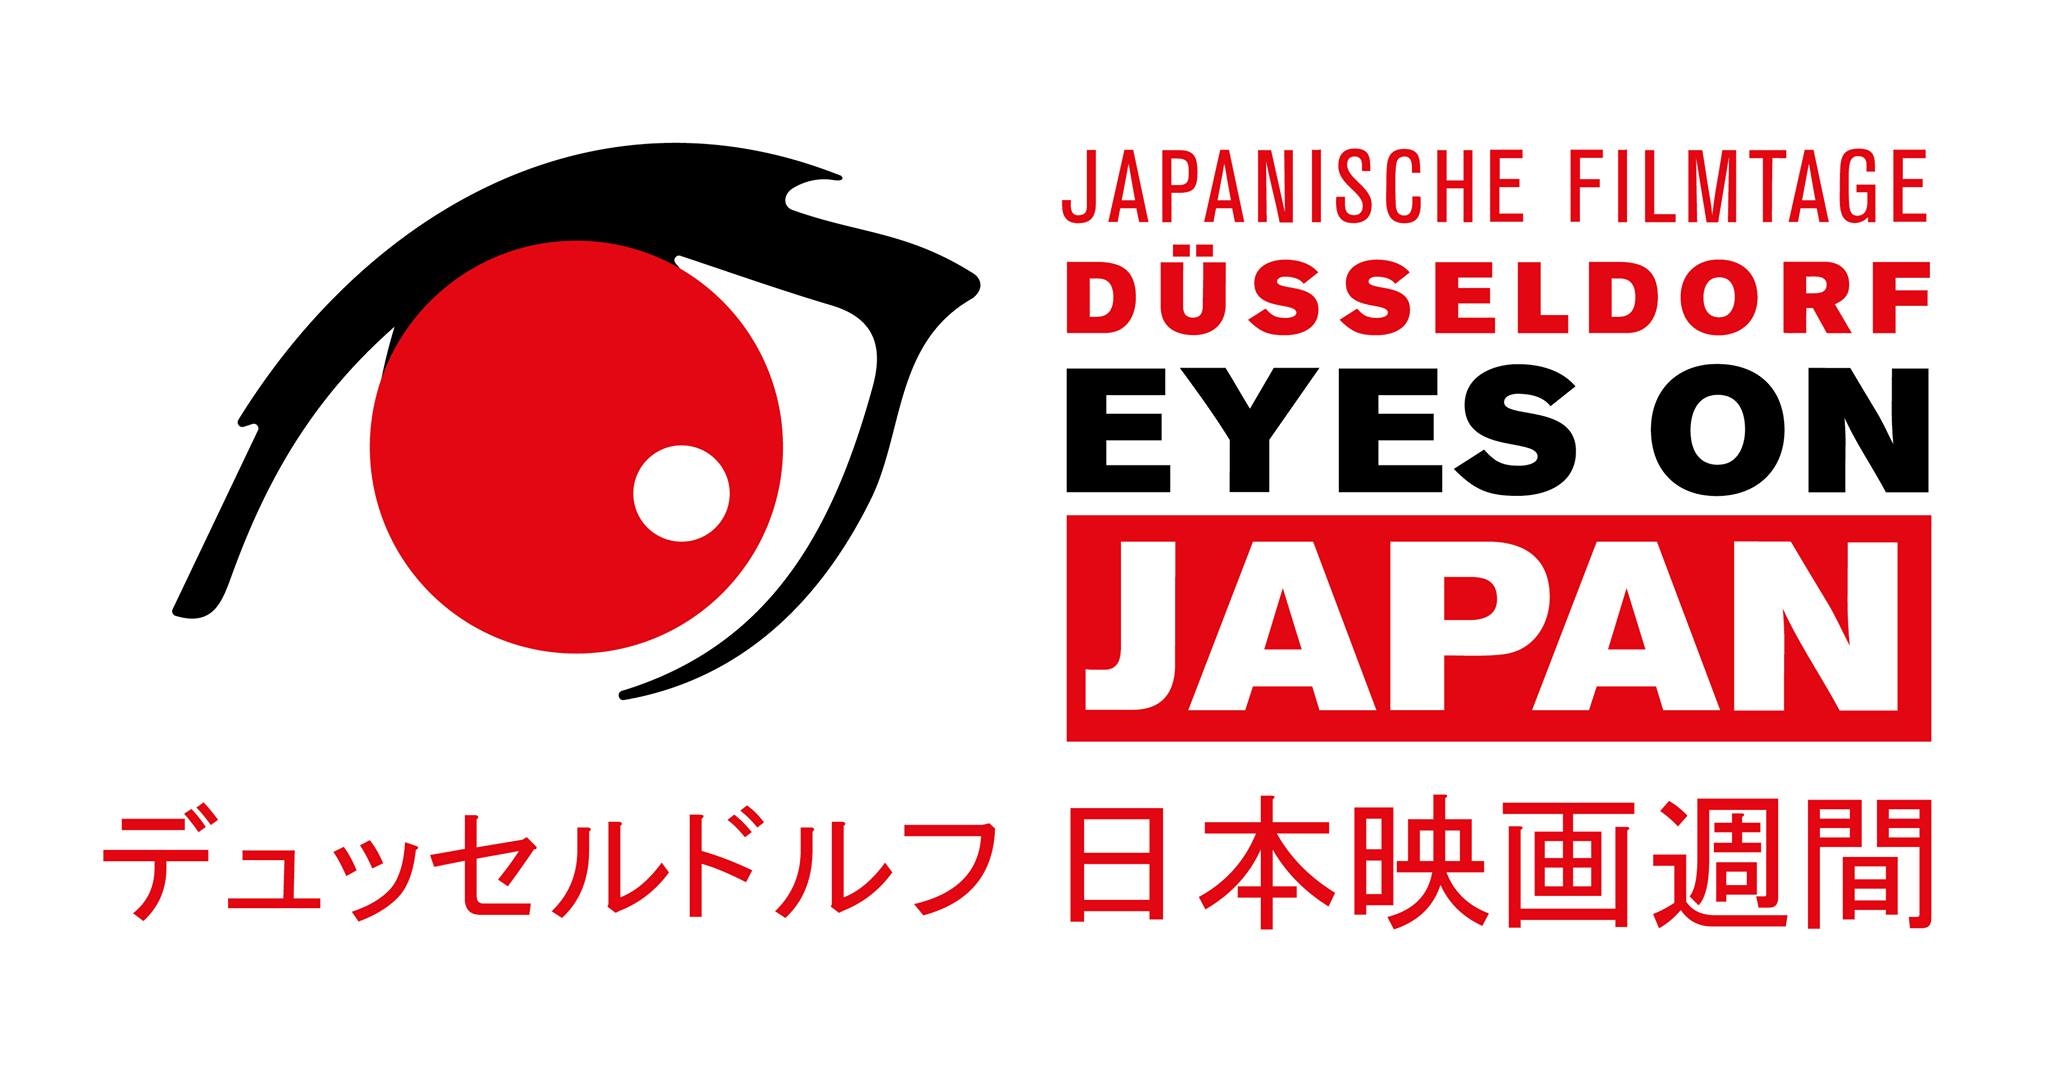 Eyes on Japan: Japanische Filmtage